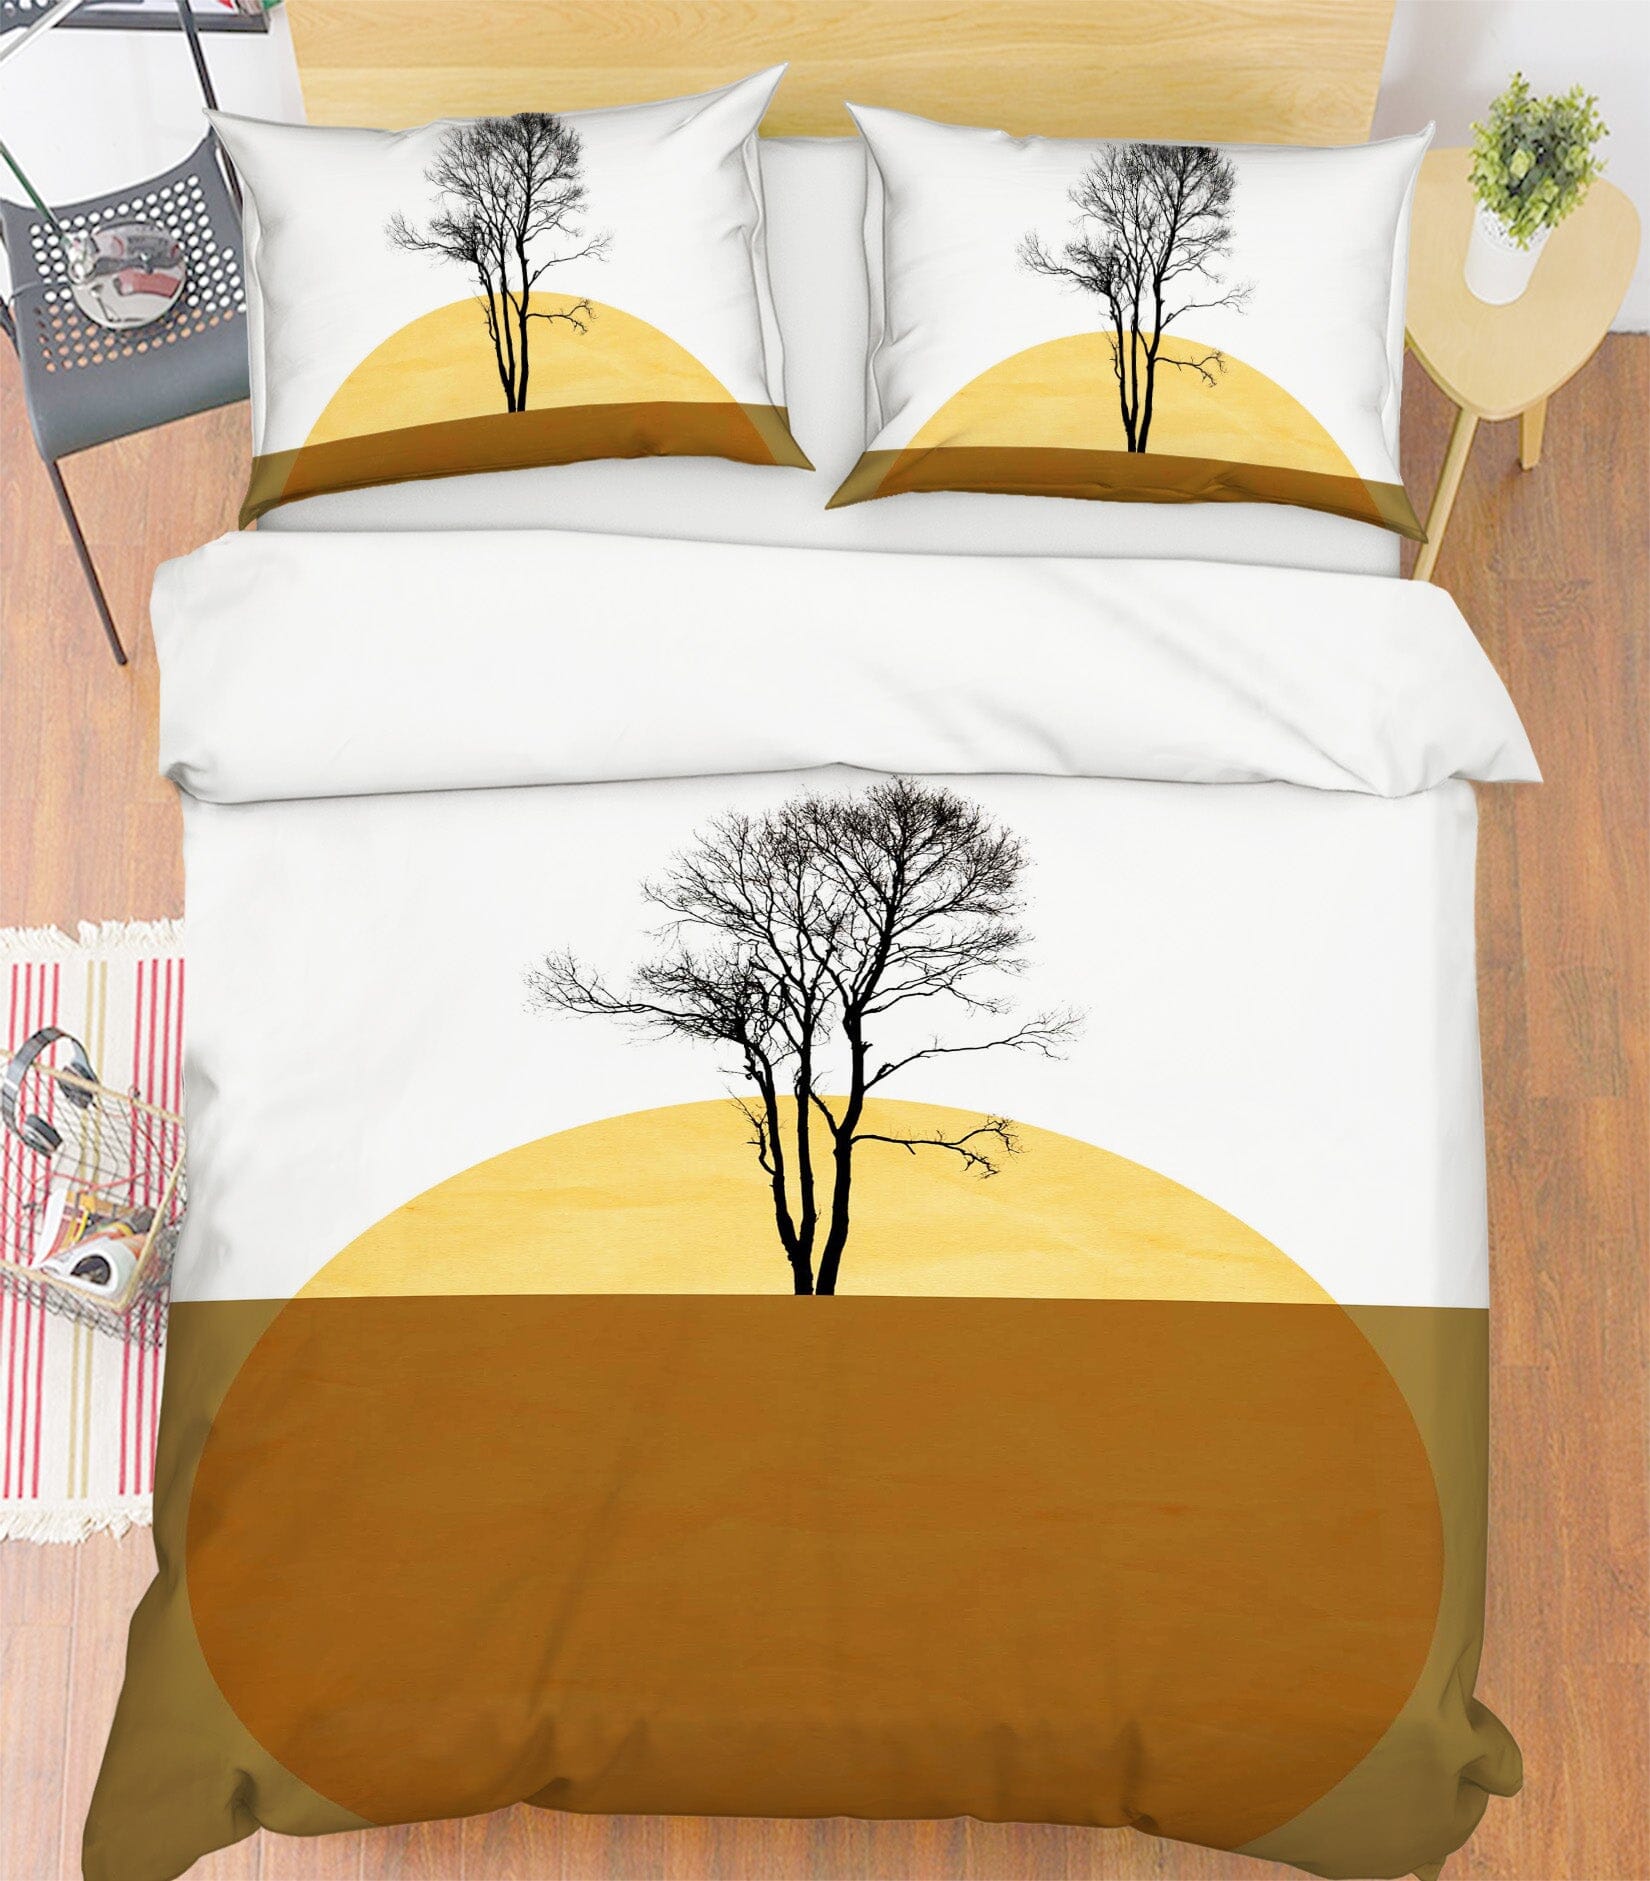 3D Golden Sea 2105 Boris Draschoff Bedding Bed Pillowcases Quilt Quiet Covers AJ Creativity Home 